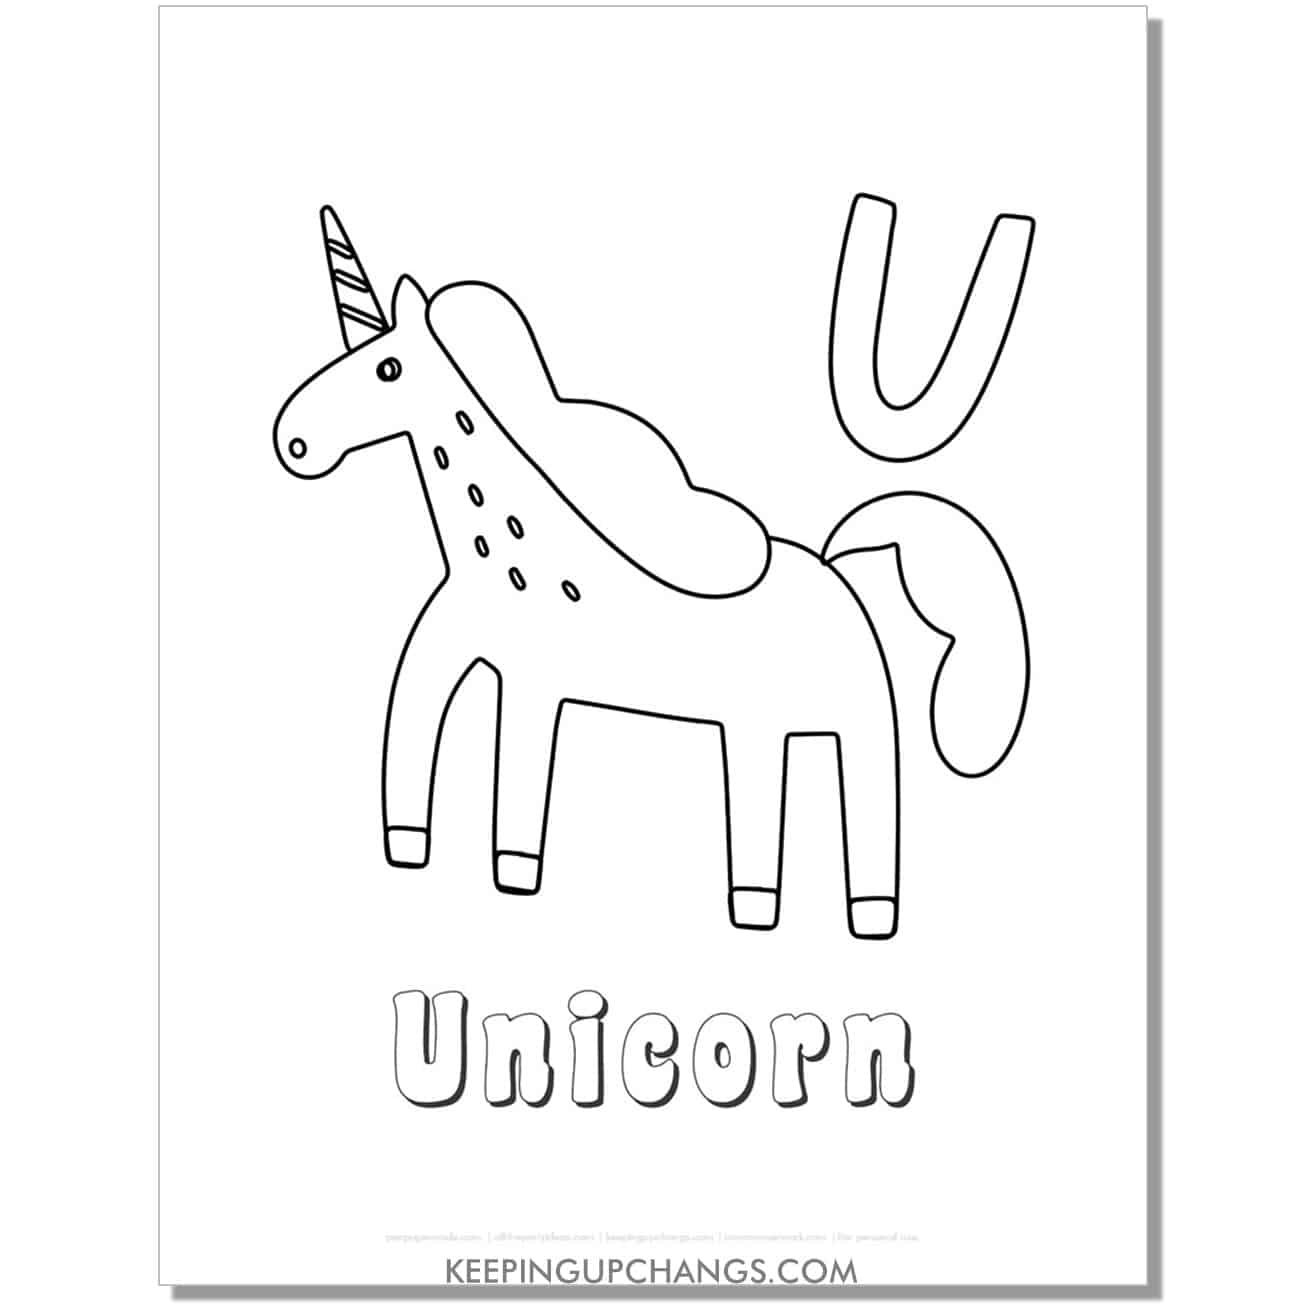 fun abc u coloring page with unicorn hand drawing.